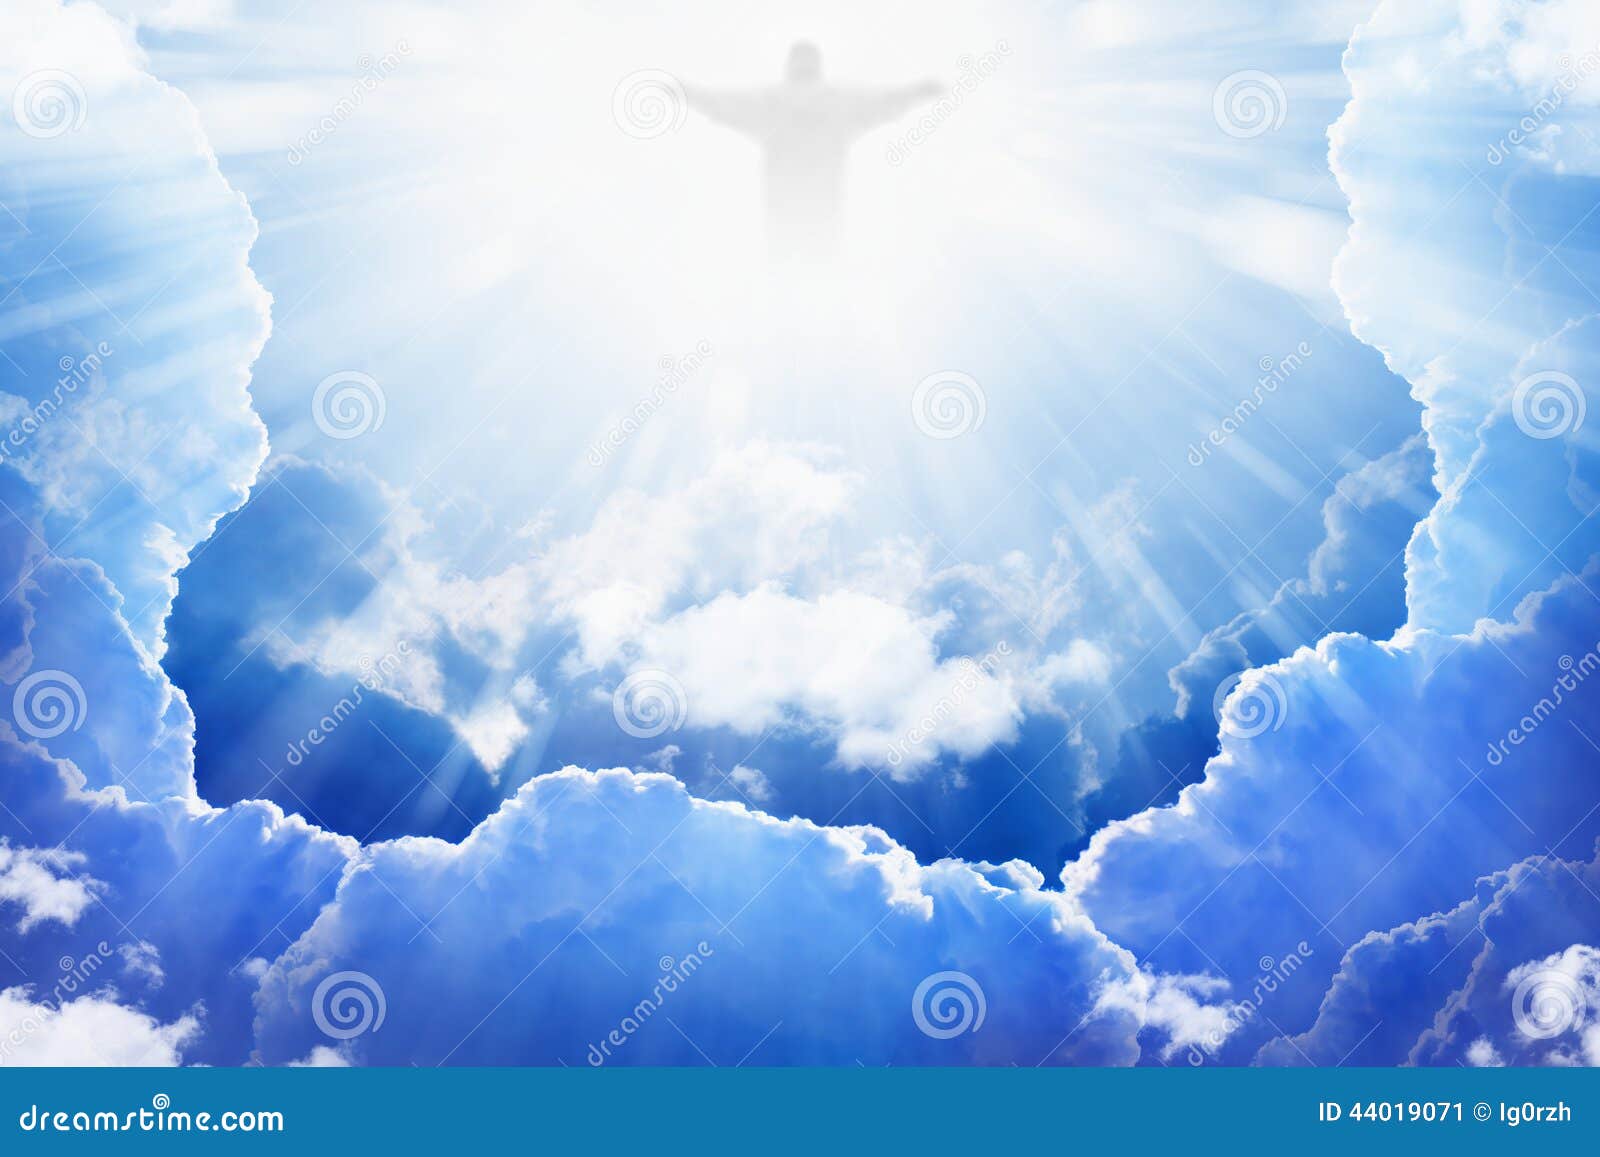 jesus in heaven wallpaper